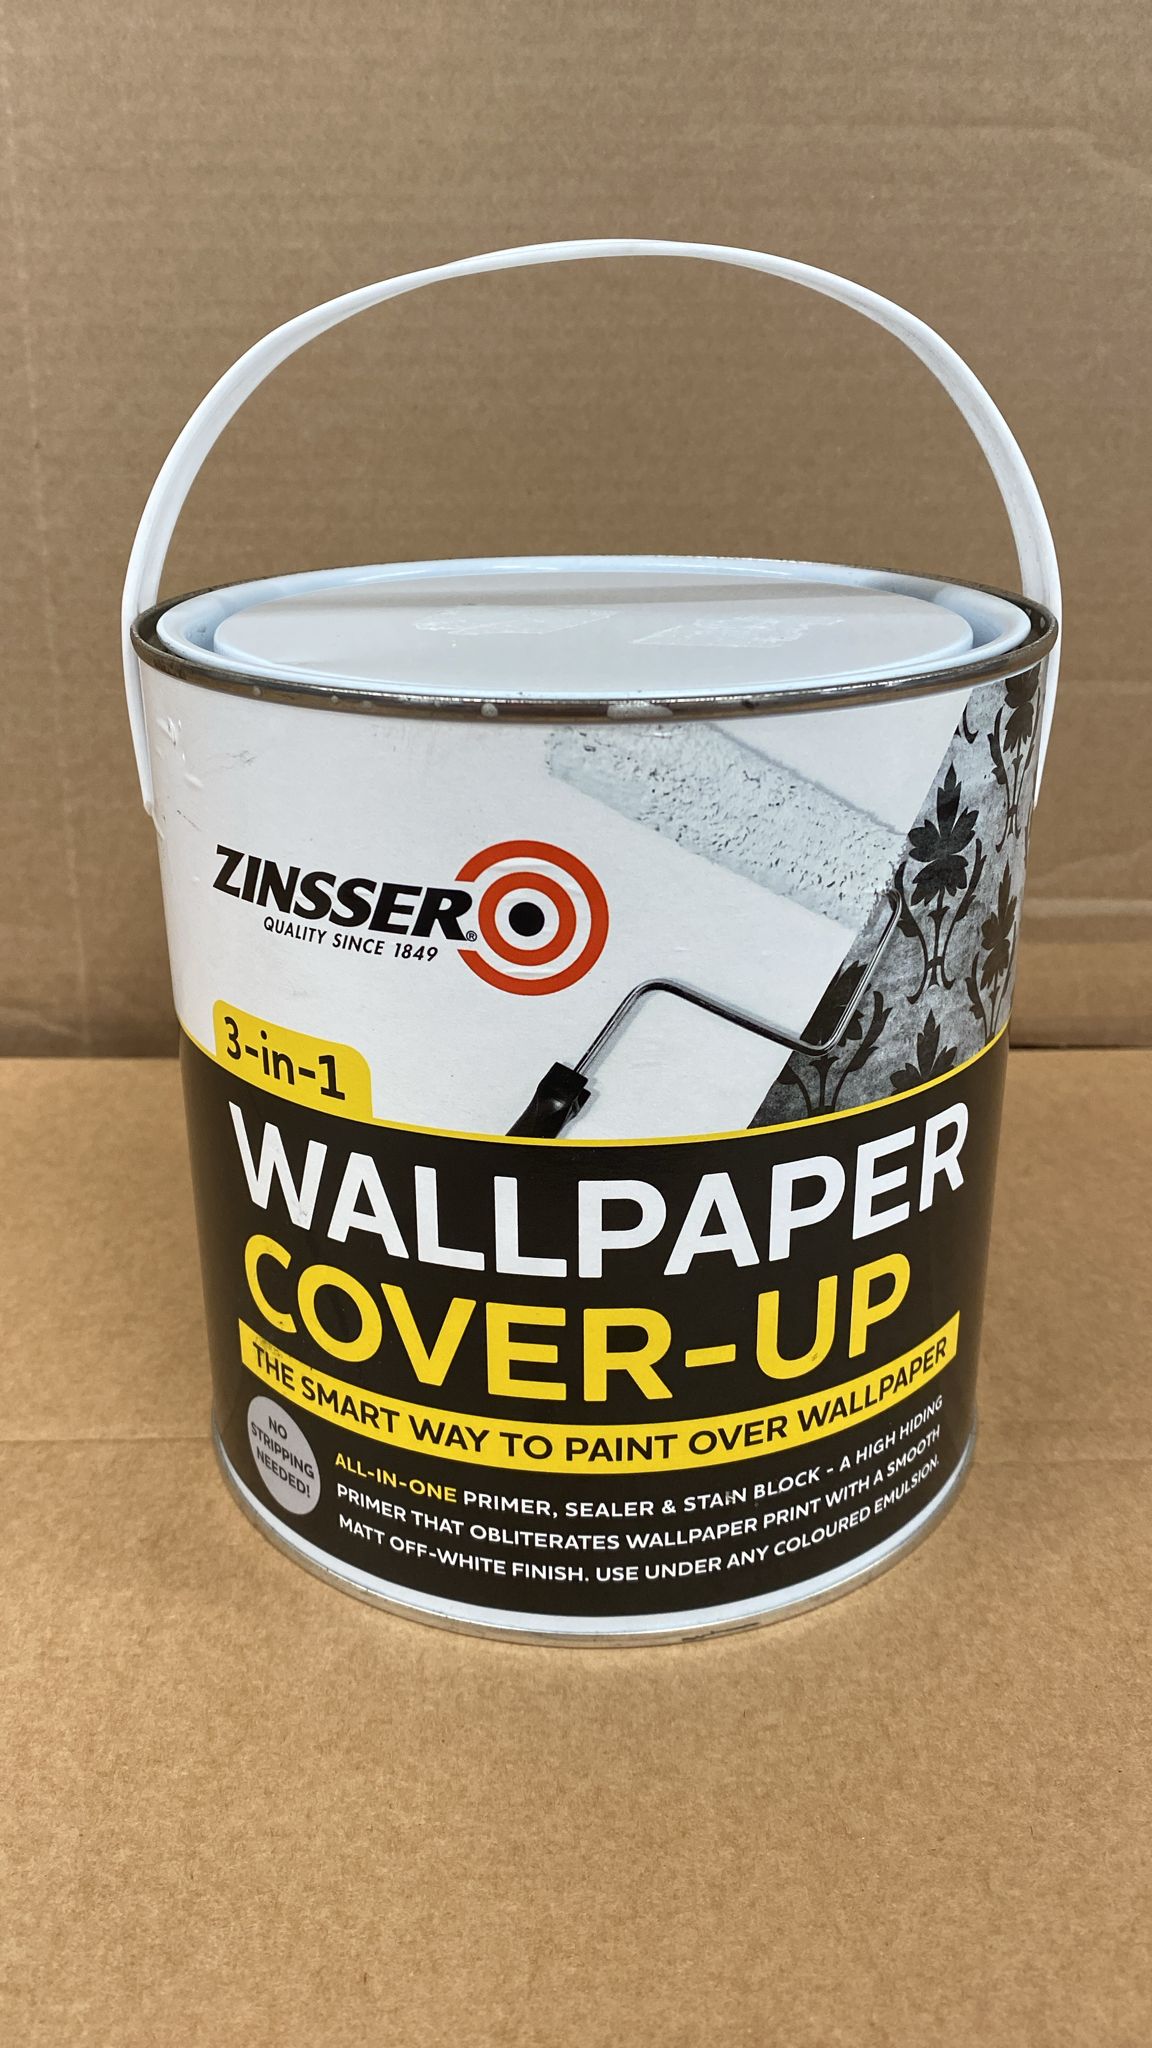 Zinsser 3-in-1 Off white Wallpaper Matt Cover-up paint, 2.5L-4021